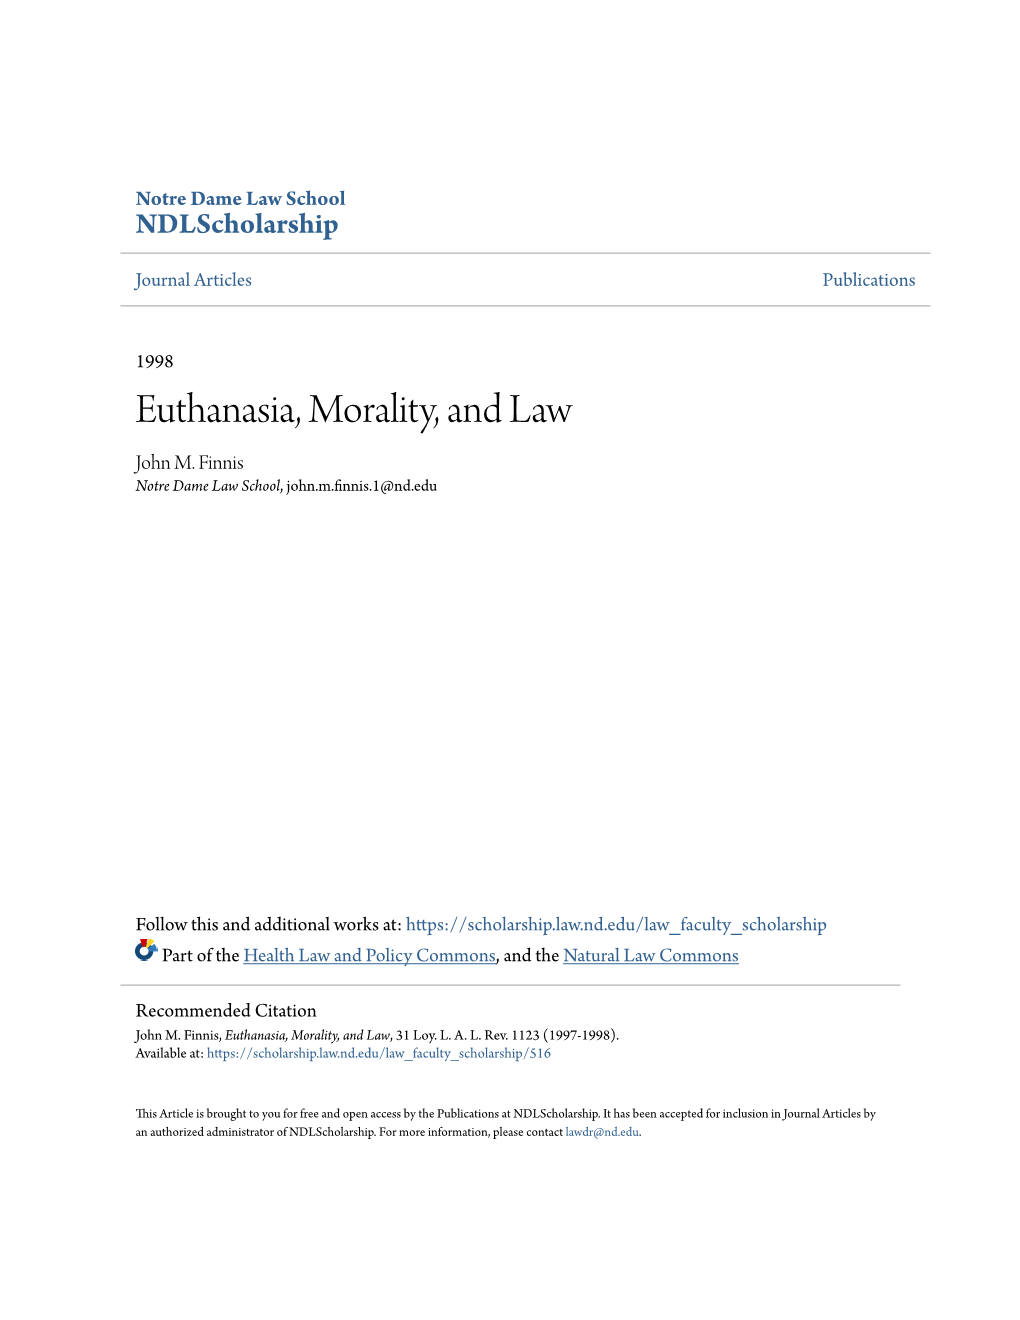 Euthanasia, Morality, and Law John M